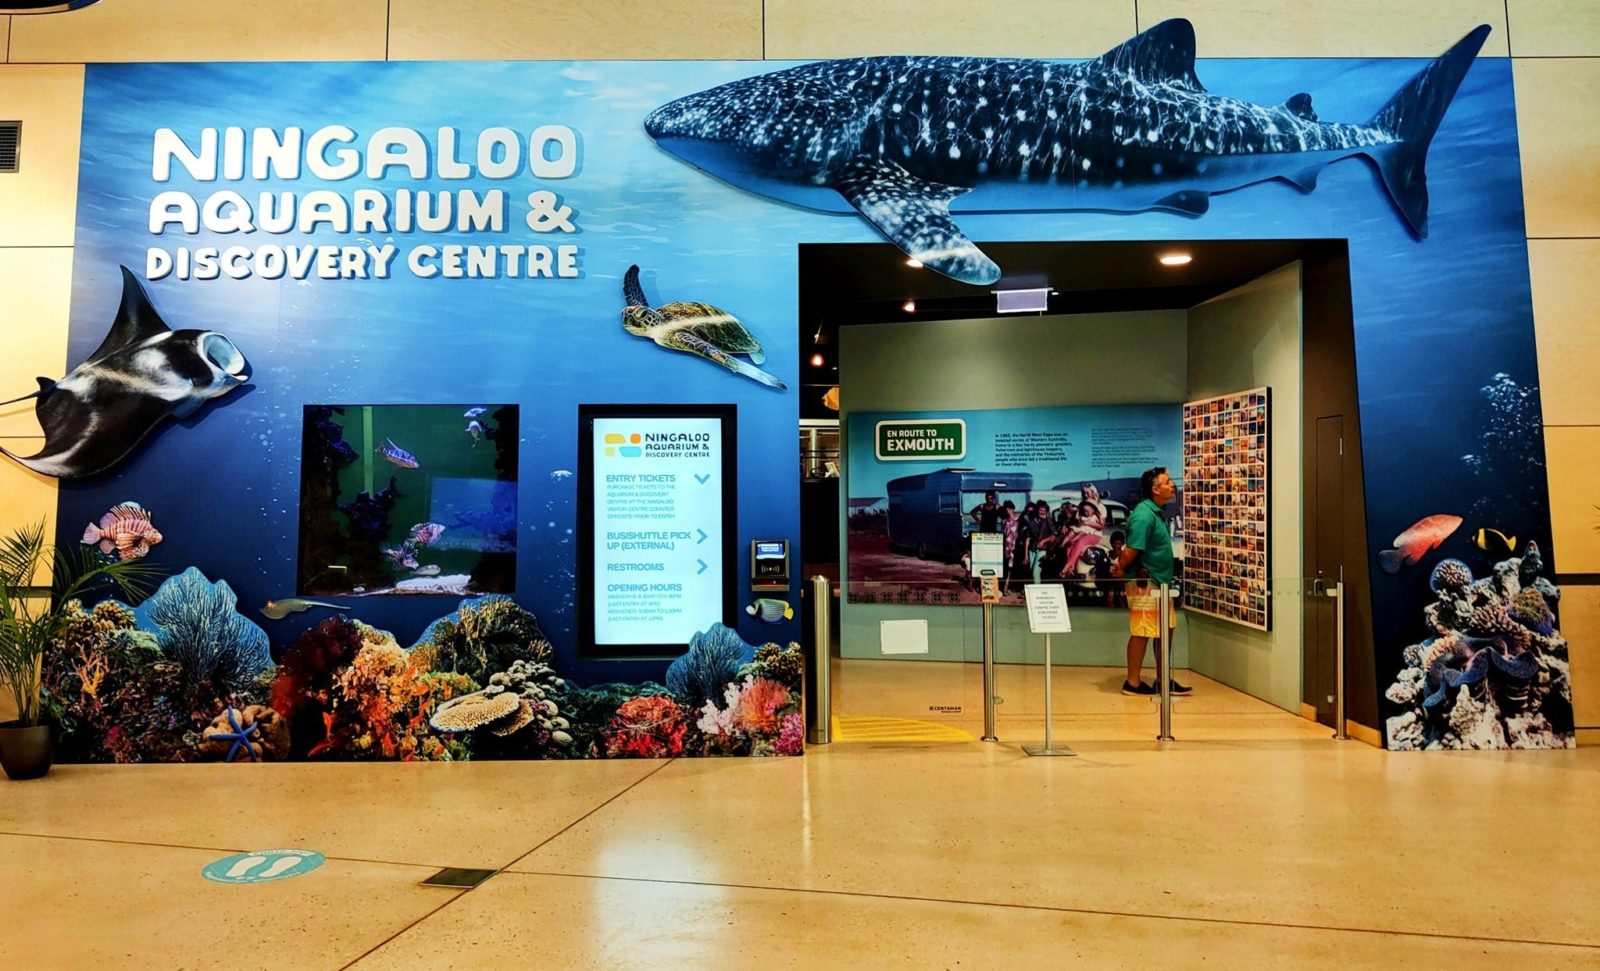 Ningaloo Aquarium & Discovery Centre, Exmouth, Western Australia